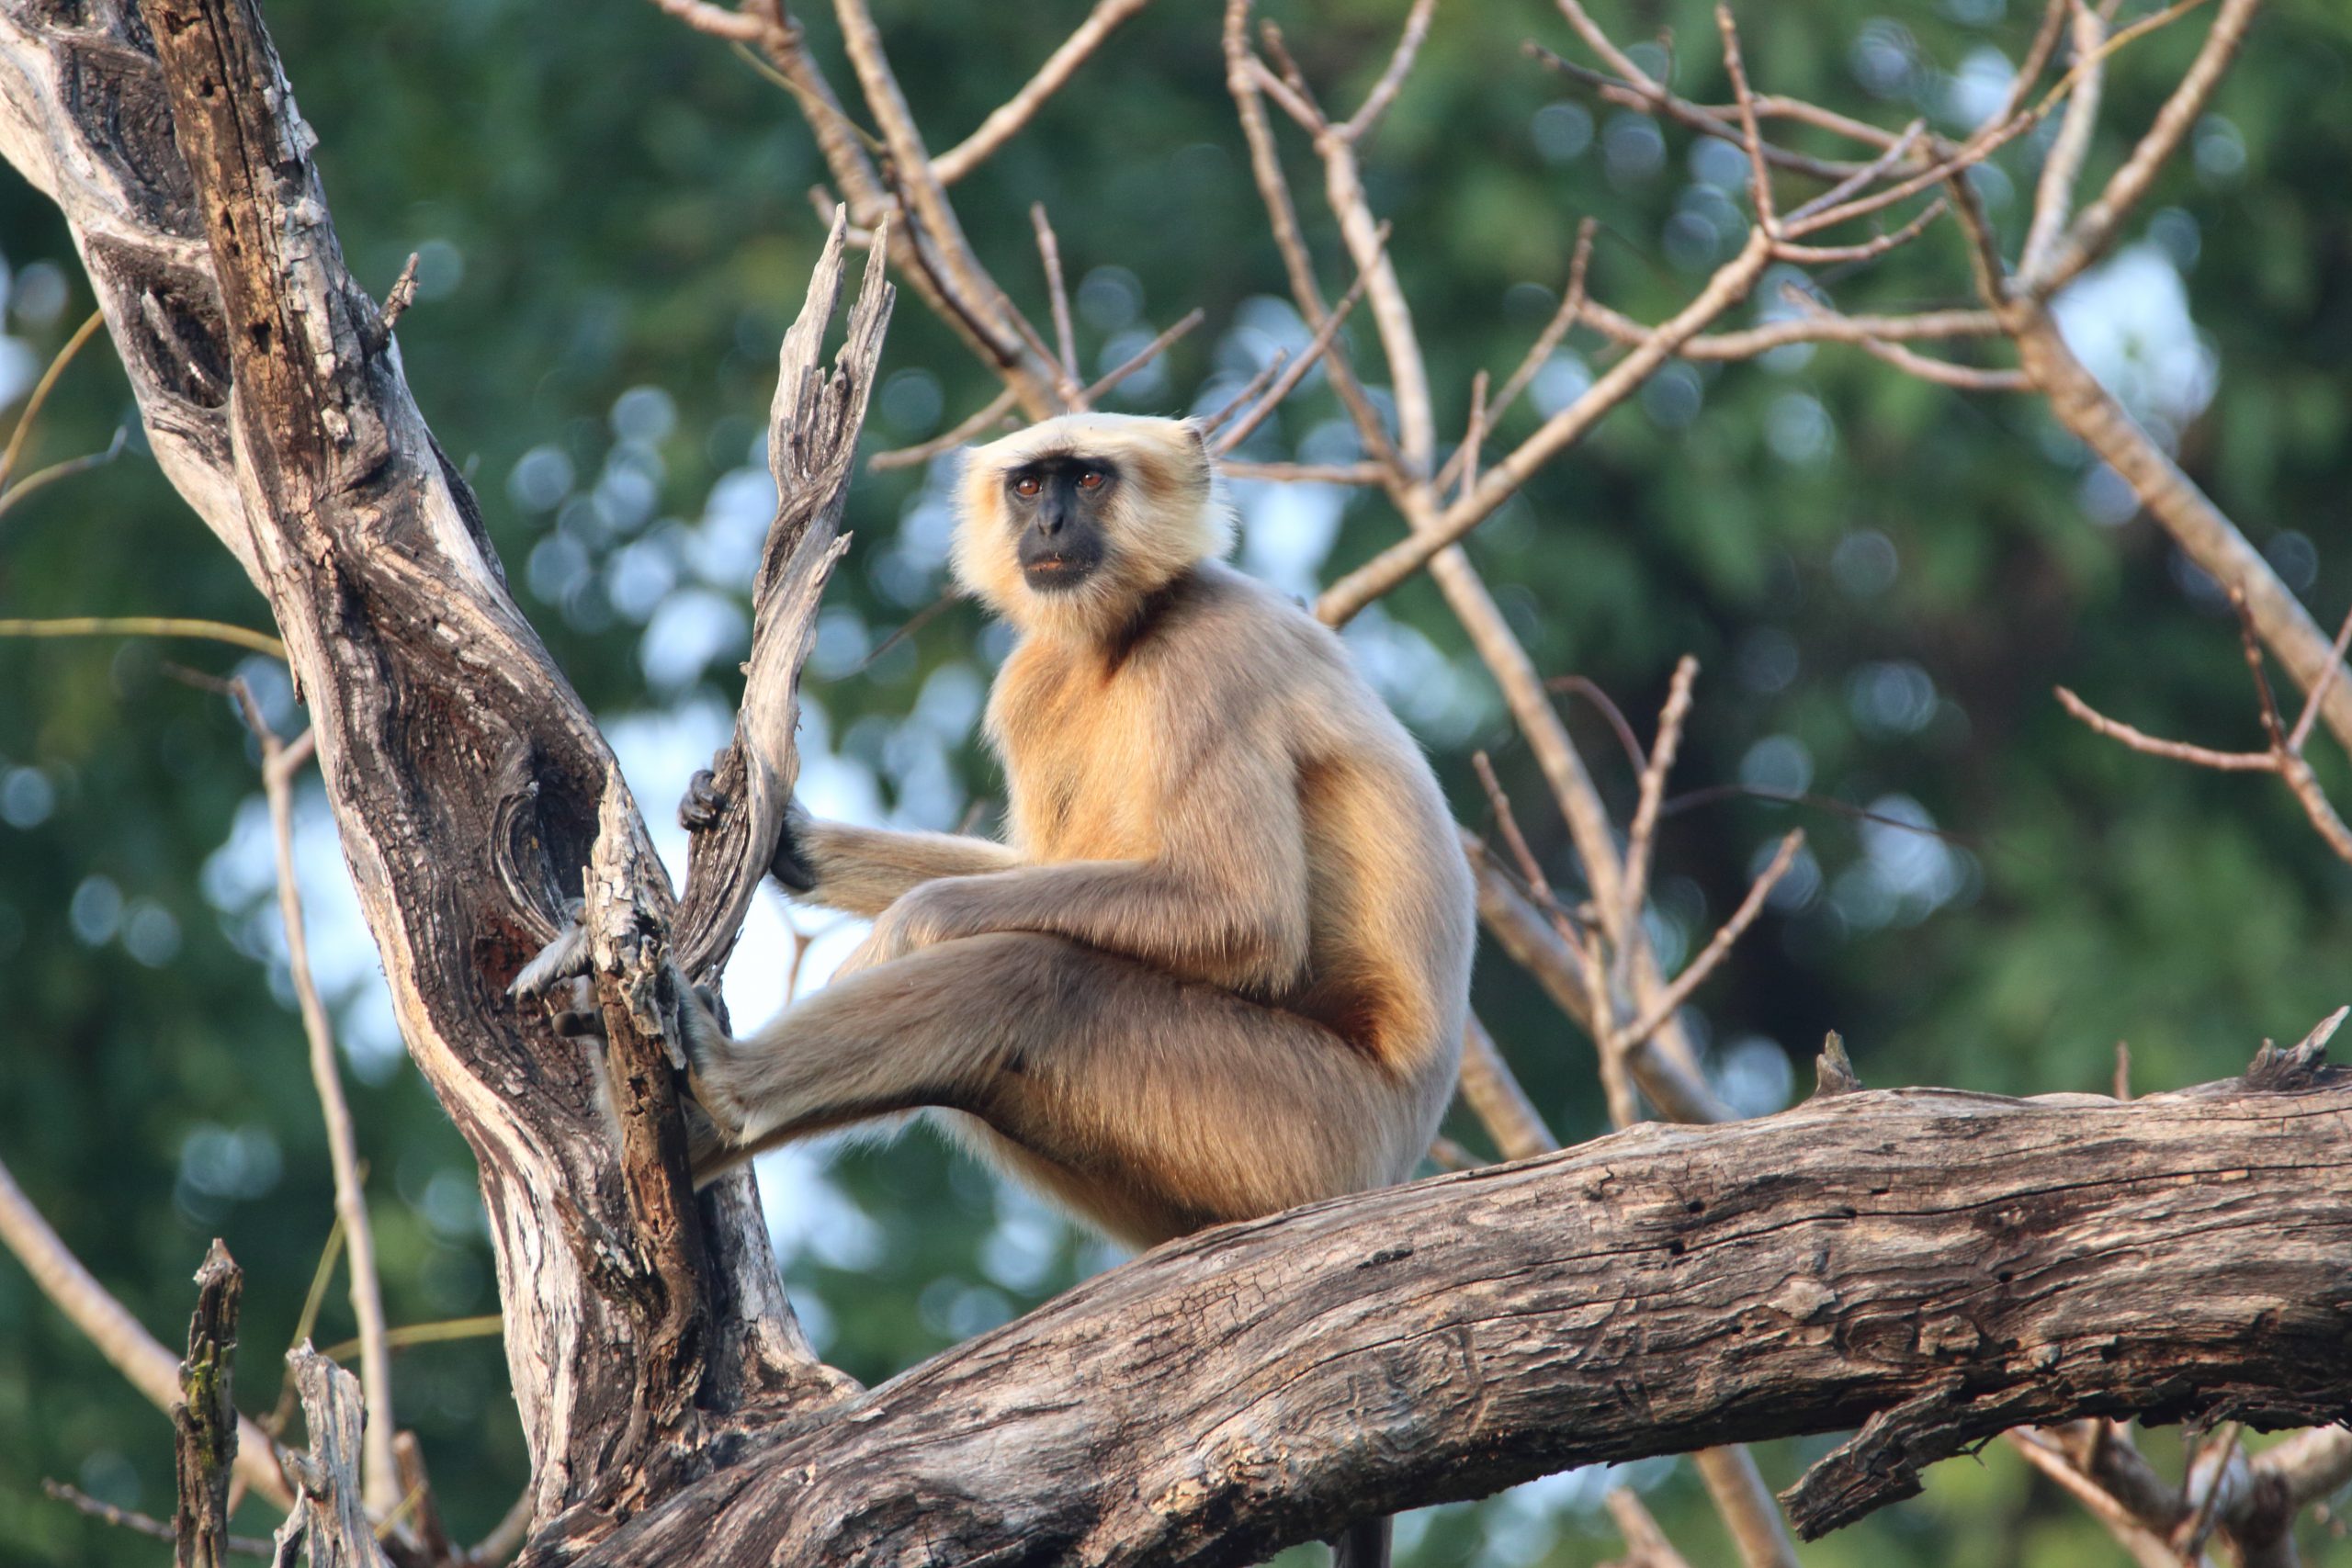 Gray langur monkey sitting on tree